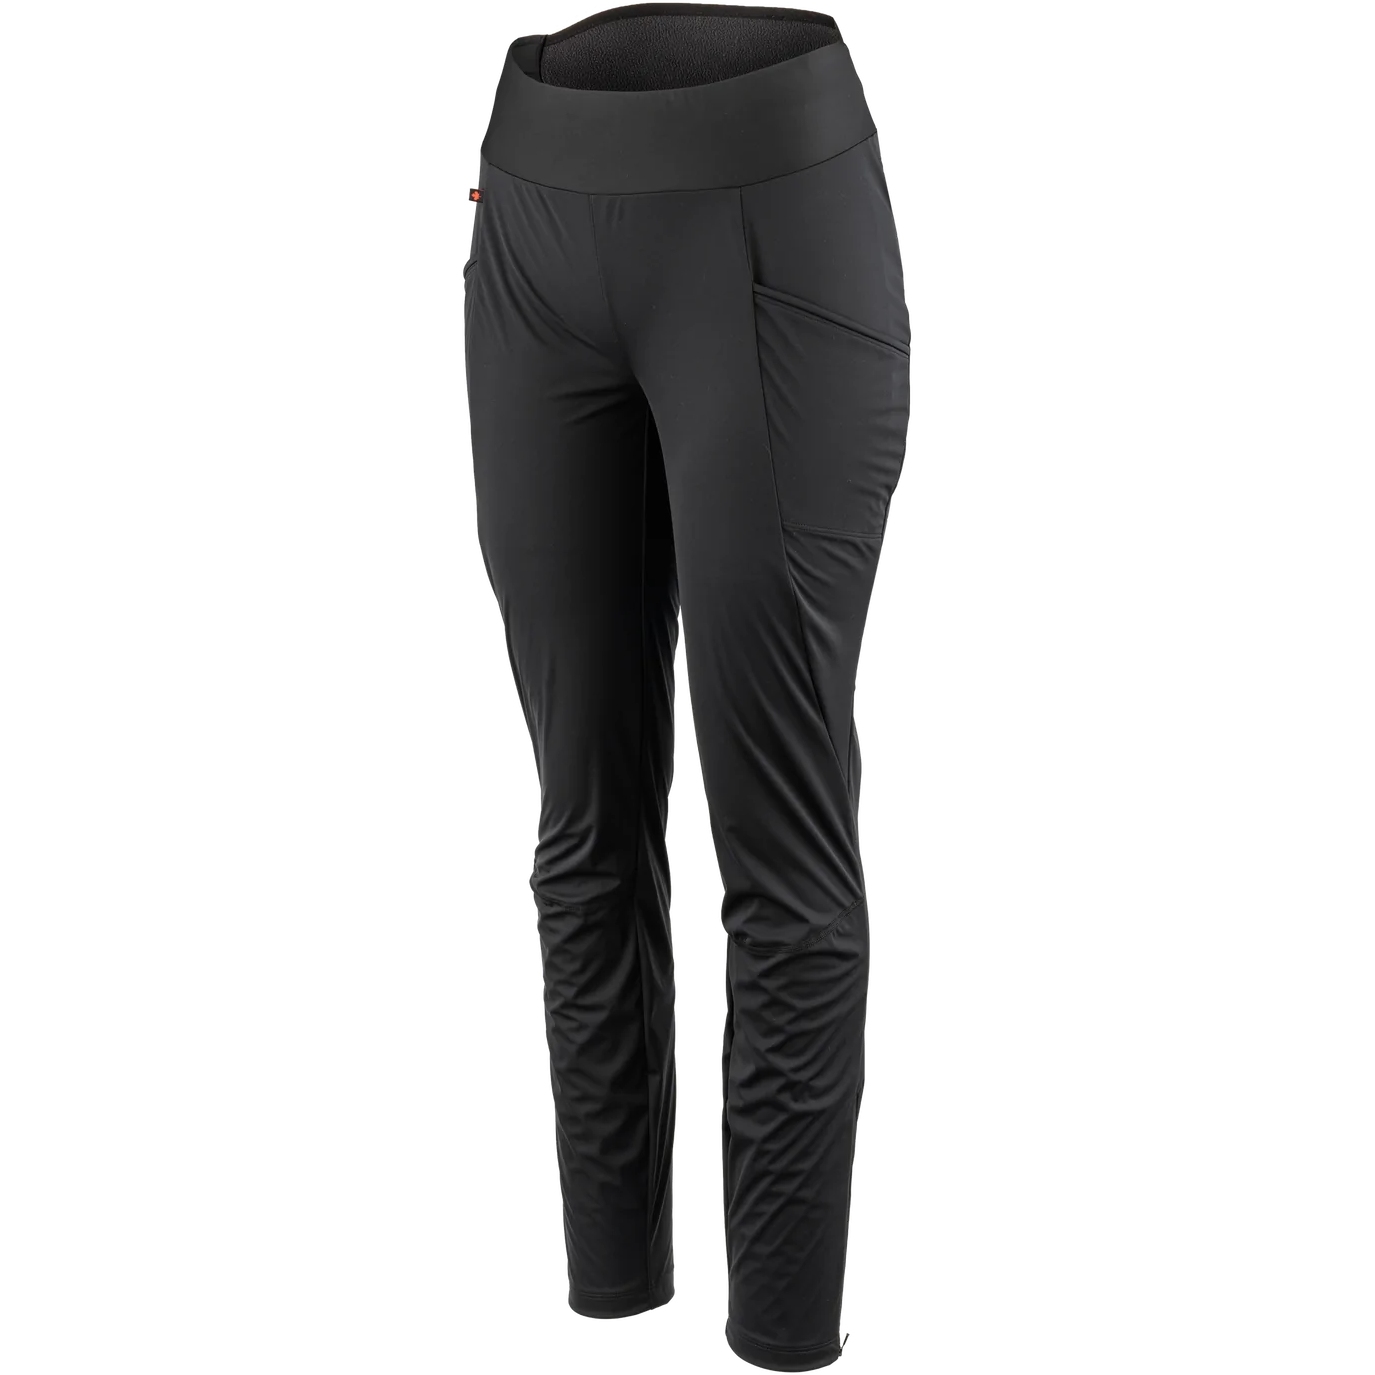 Sugoi Women's Zeroplus Wind pants - Black (U425030FBLK)